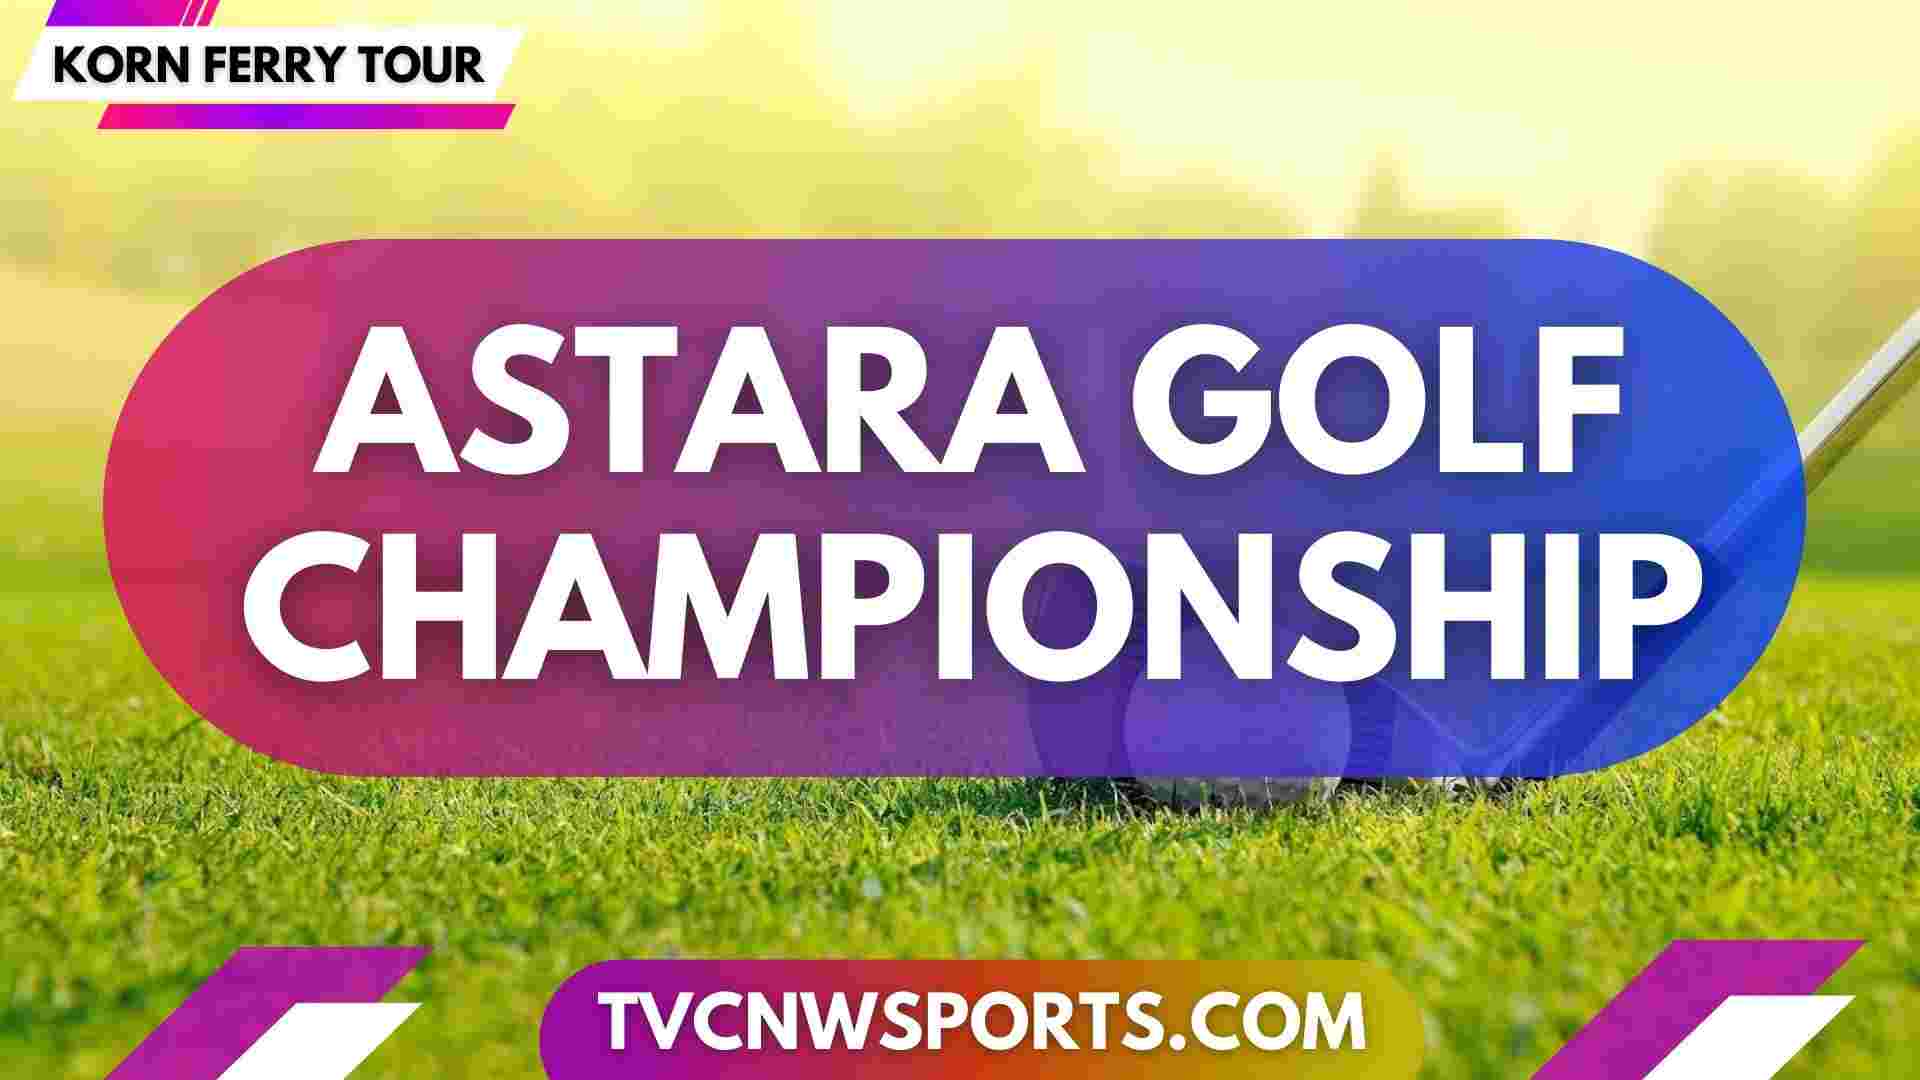 Astara Golf Championship Korn Ferry Tour